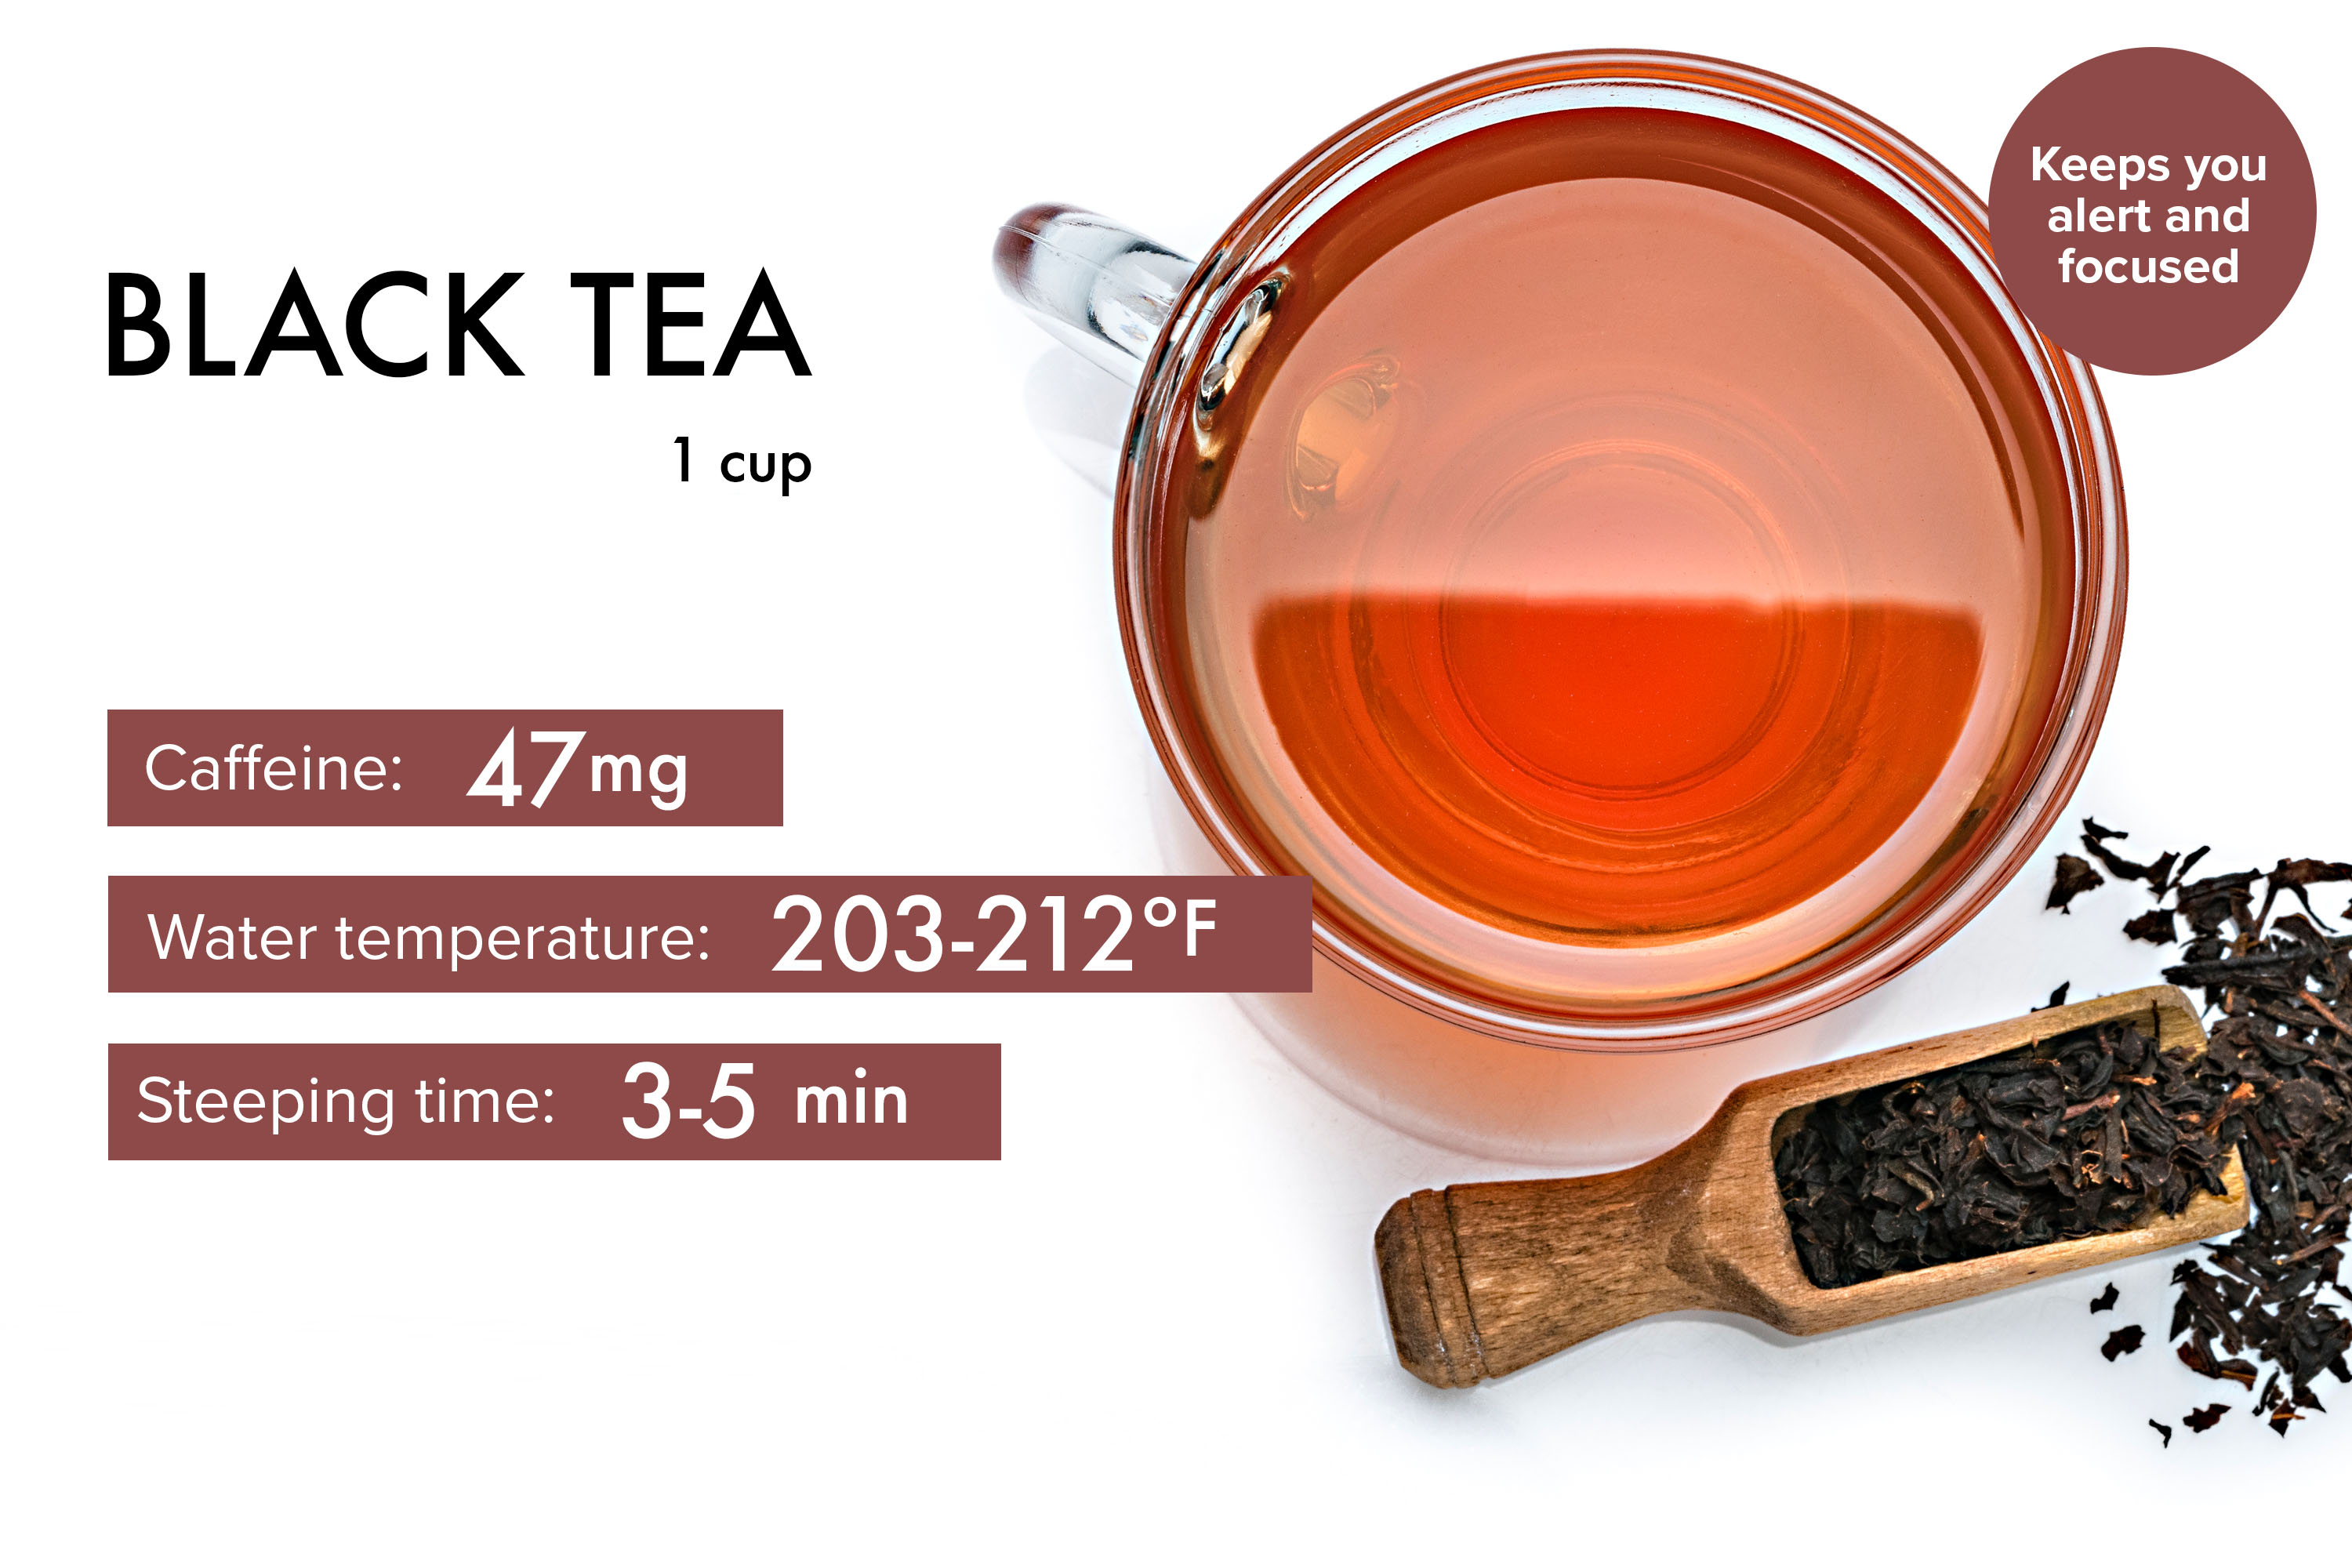 Pure Leaf Cold Brew Tea Black Tea With Crisp Lemon Flavor 59 Fl Oz Bottle, Ready To Drink